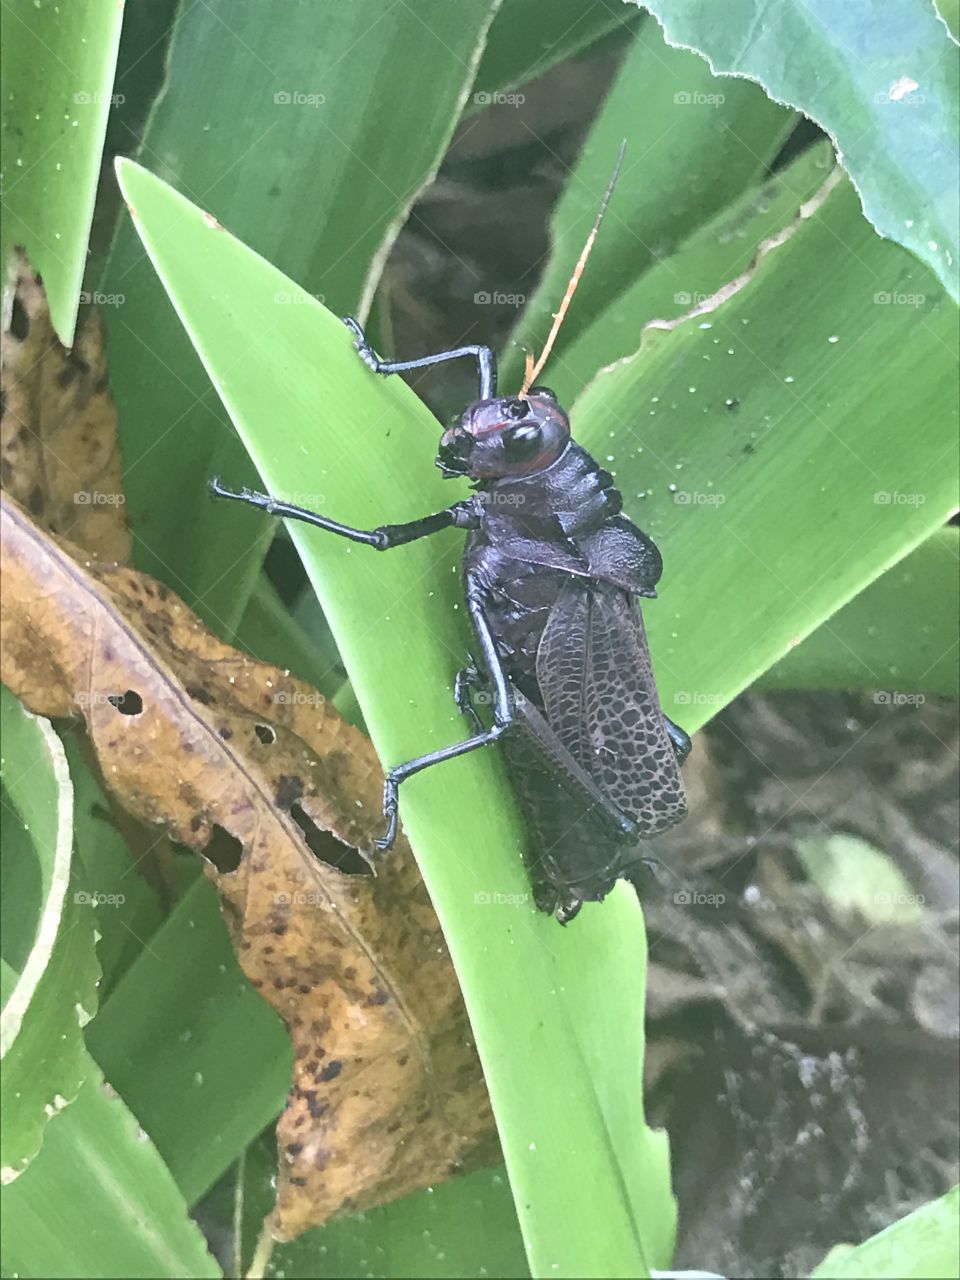 Grasshopper, Panama, December 2016